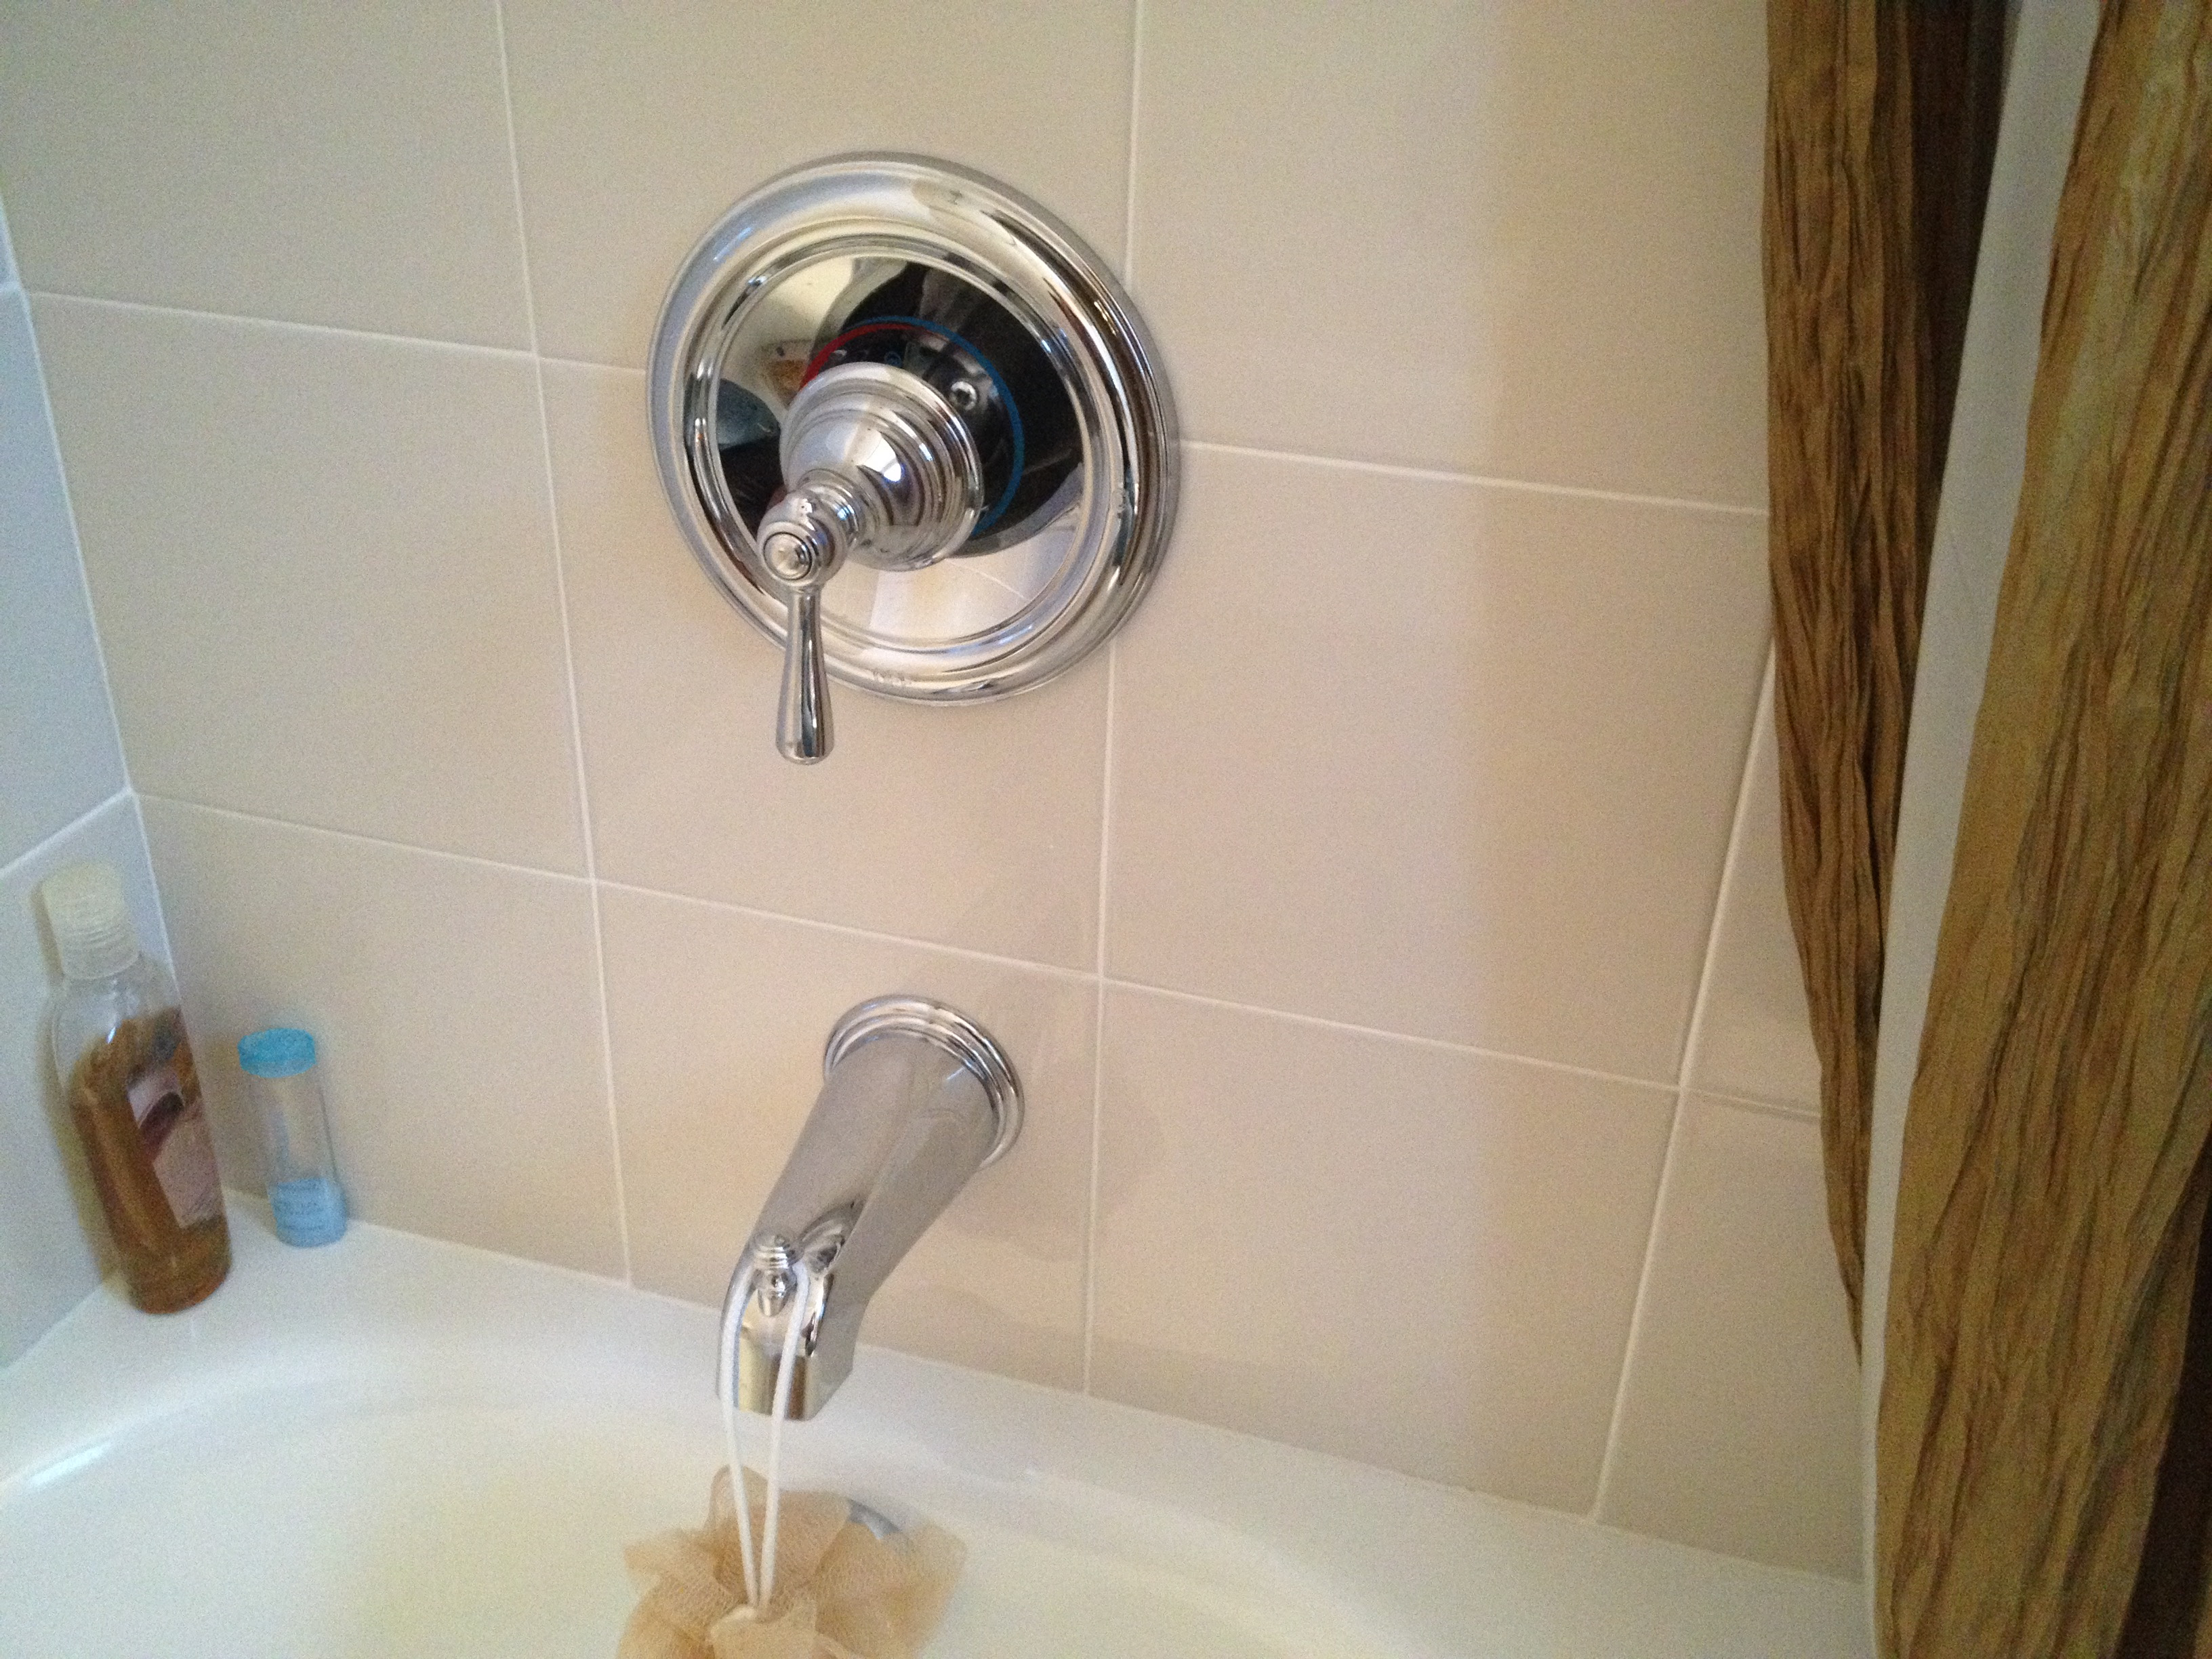 Bathroom Sink Faucet No Hot Water - VersoSembossa No Hot Water In Shower But Hot Water In Sink